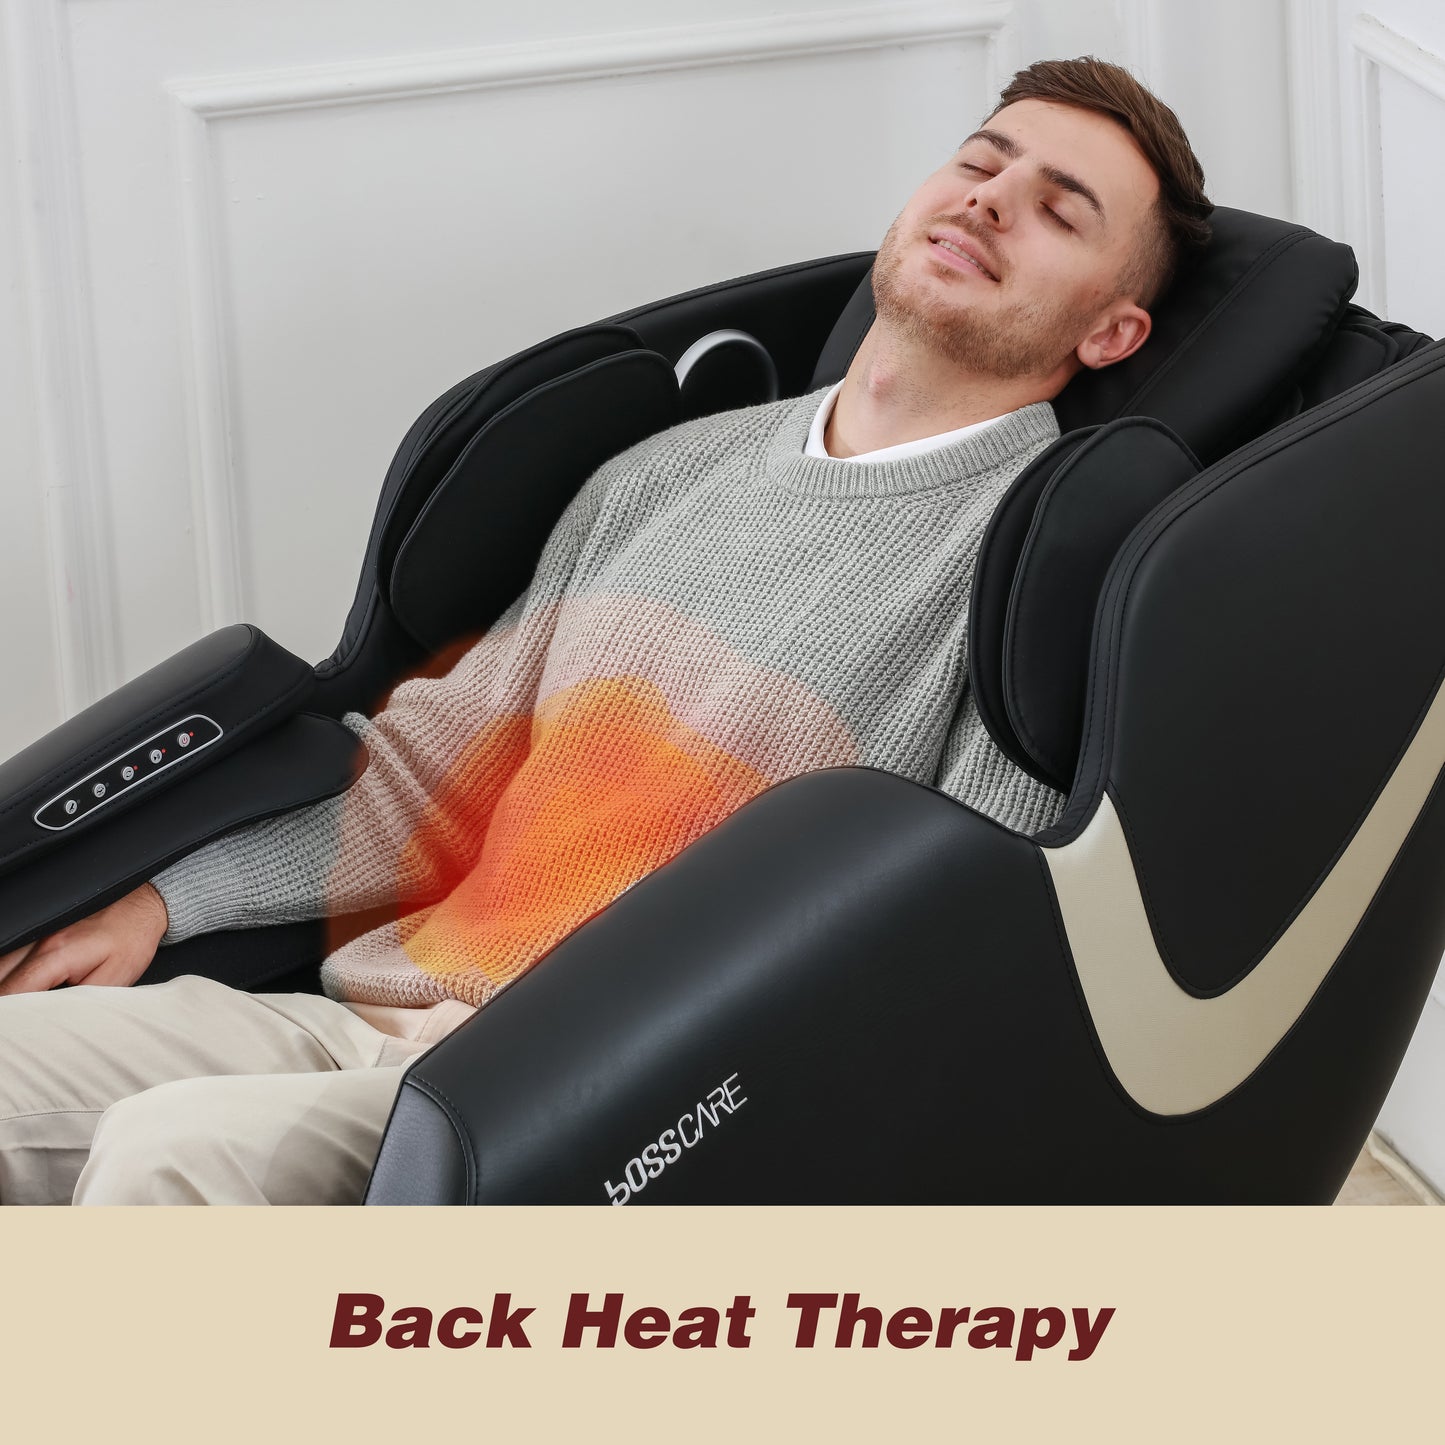 BOSSCARE Massage Chair Recliner with Zero Gravity Airbag & Roller Massage Bluetooth Speaker